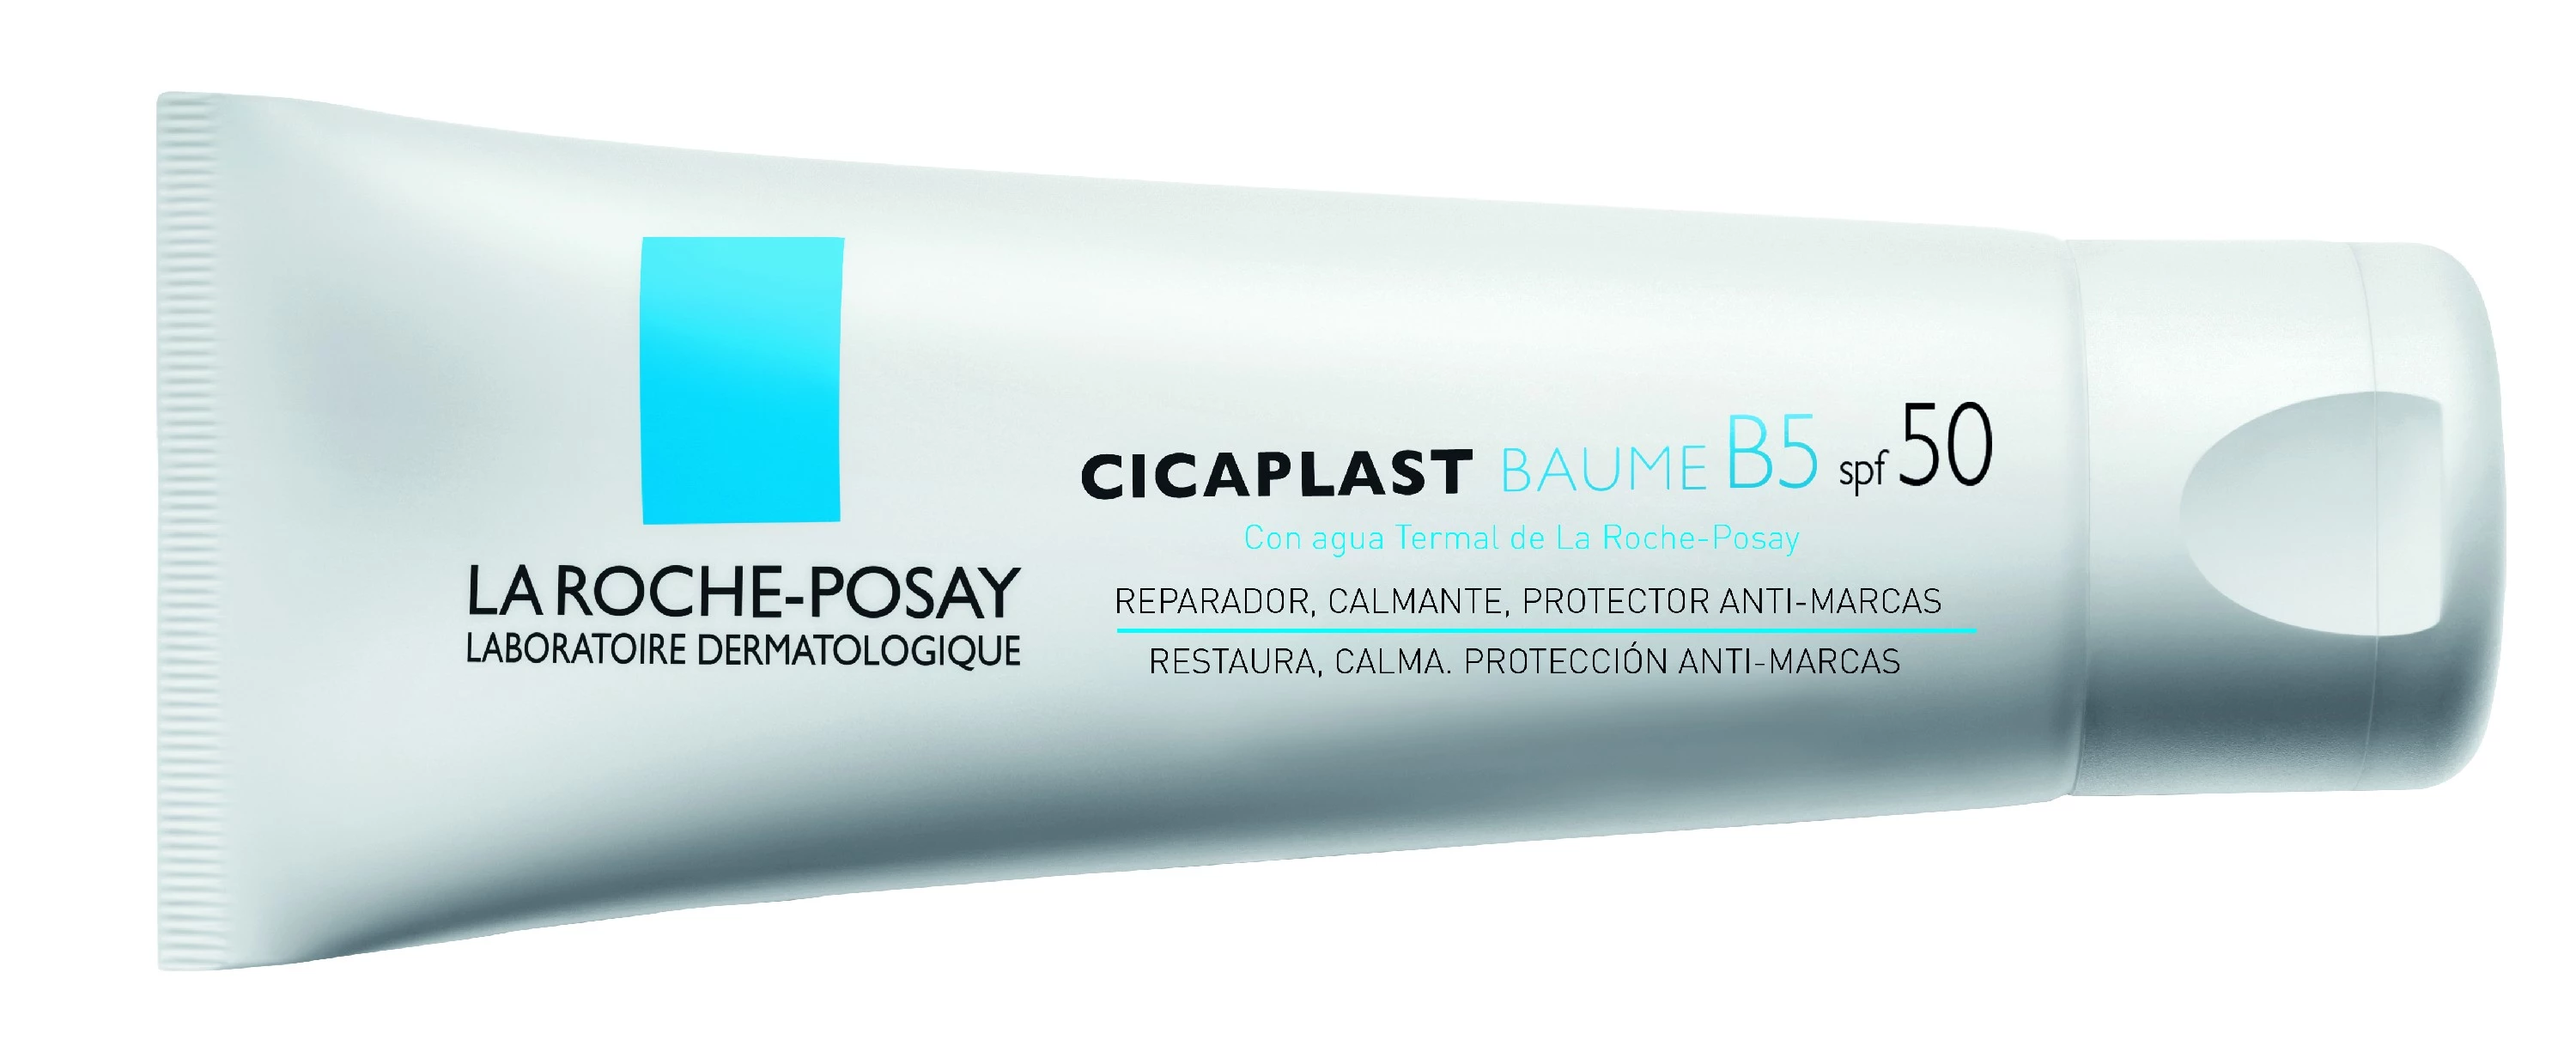 La Roche-Posay Cicaplast Baume B5 SPF50, 30ml.